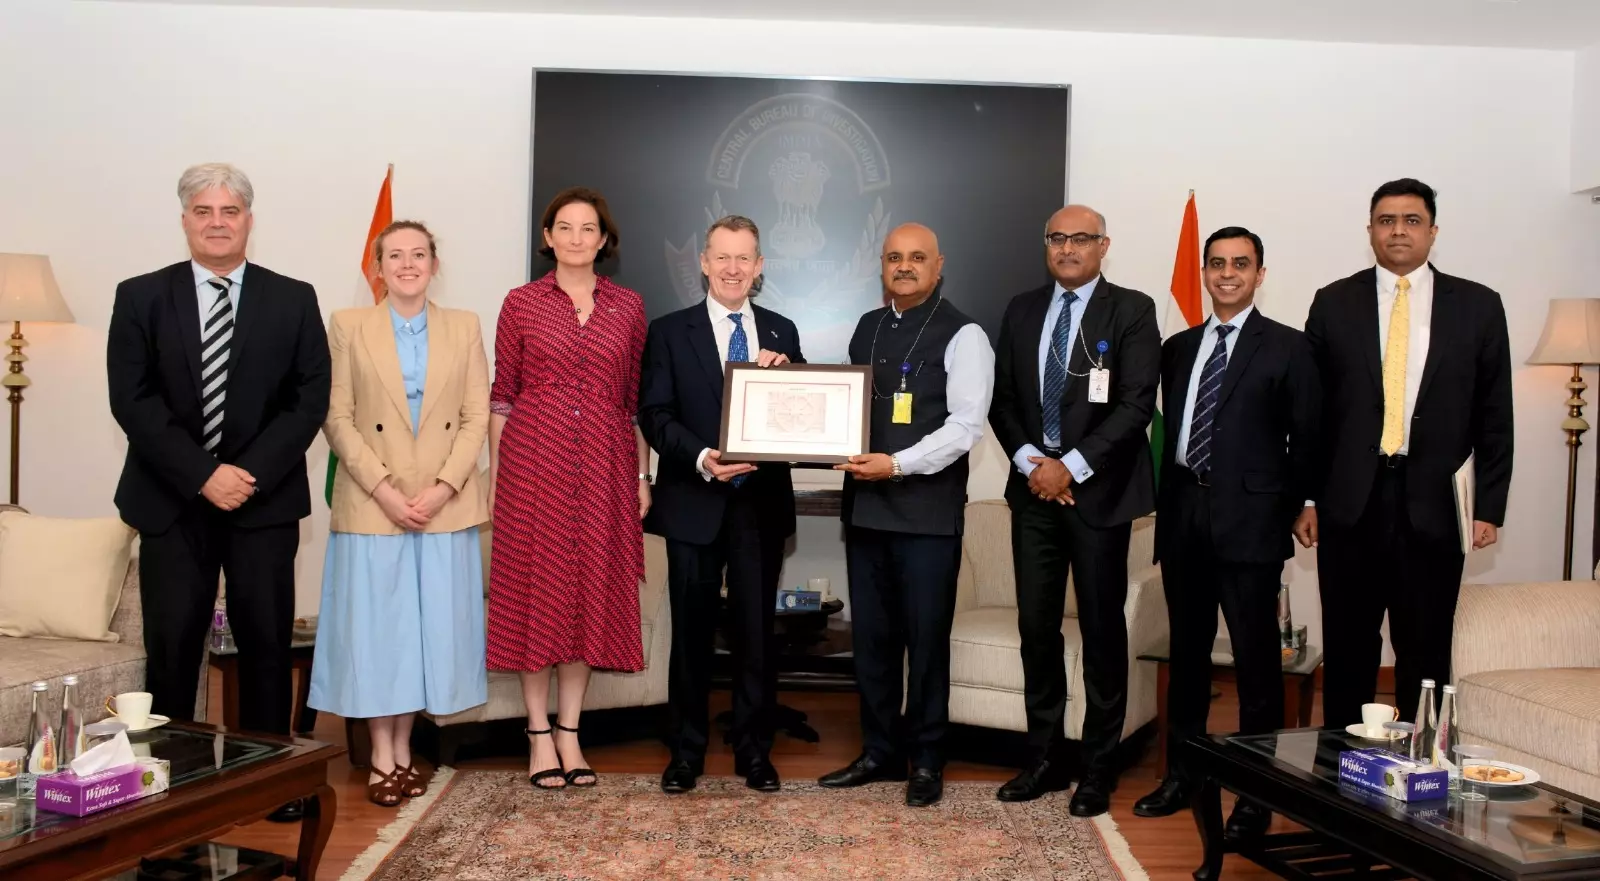 High level delegation from UK visits CBI headquarters in New Delhi